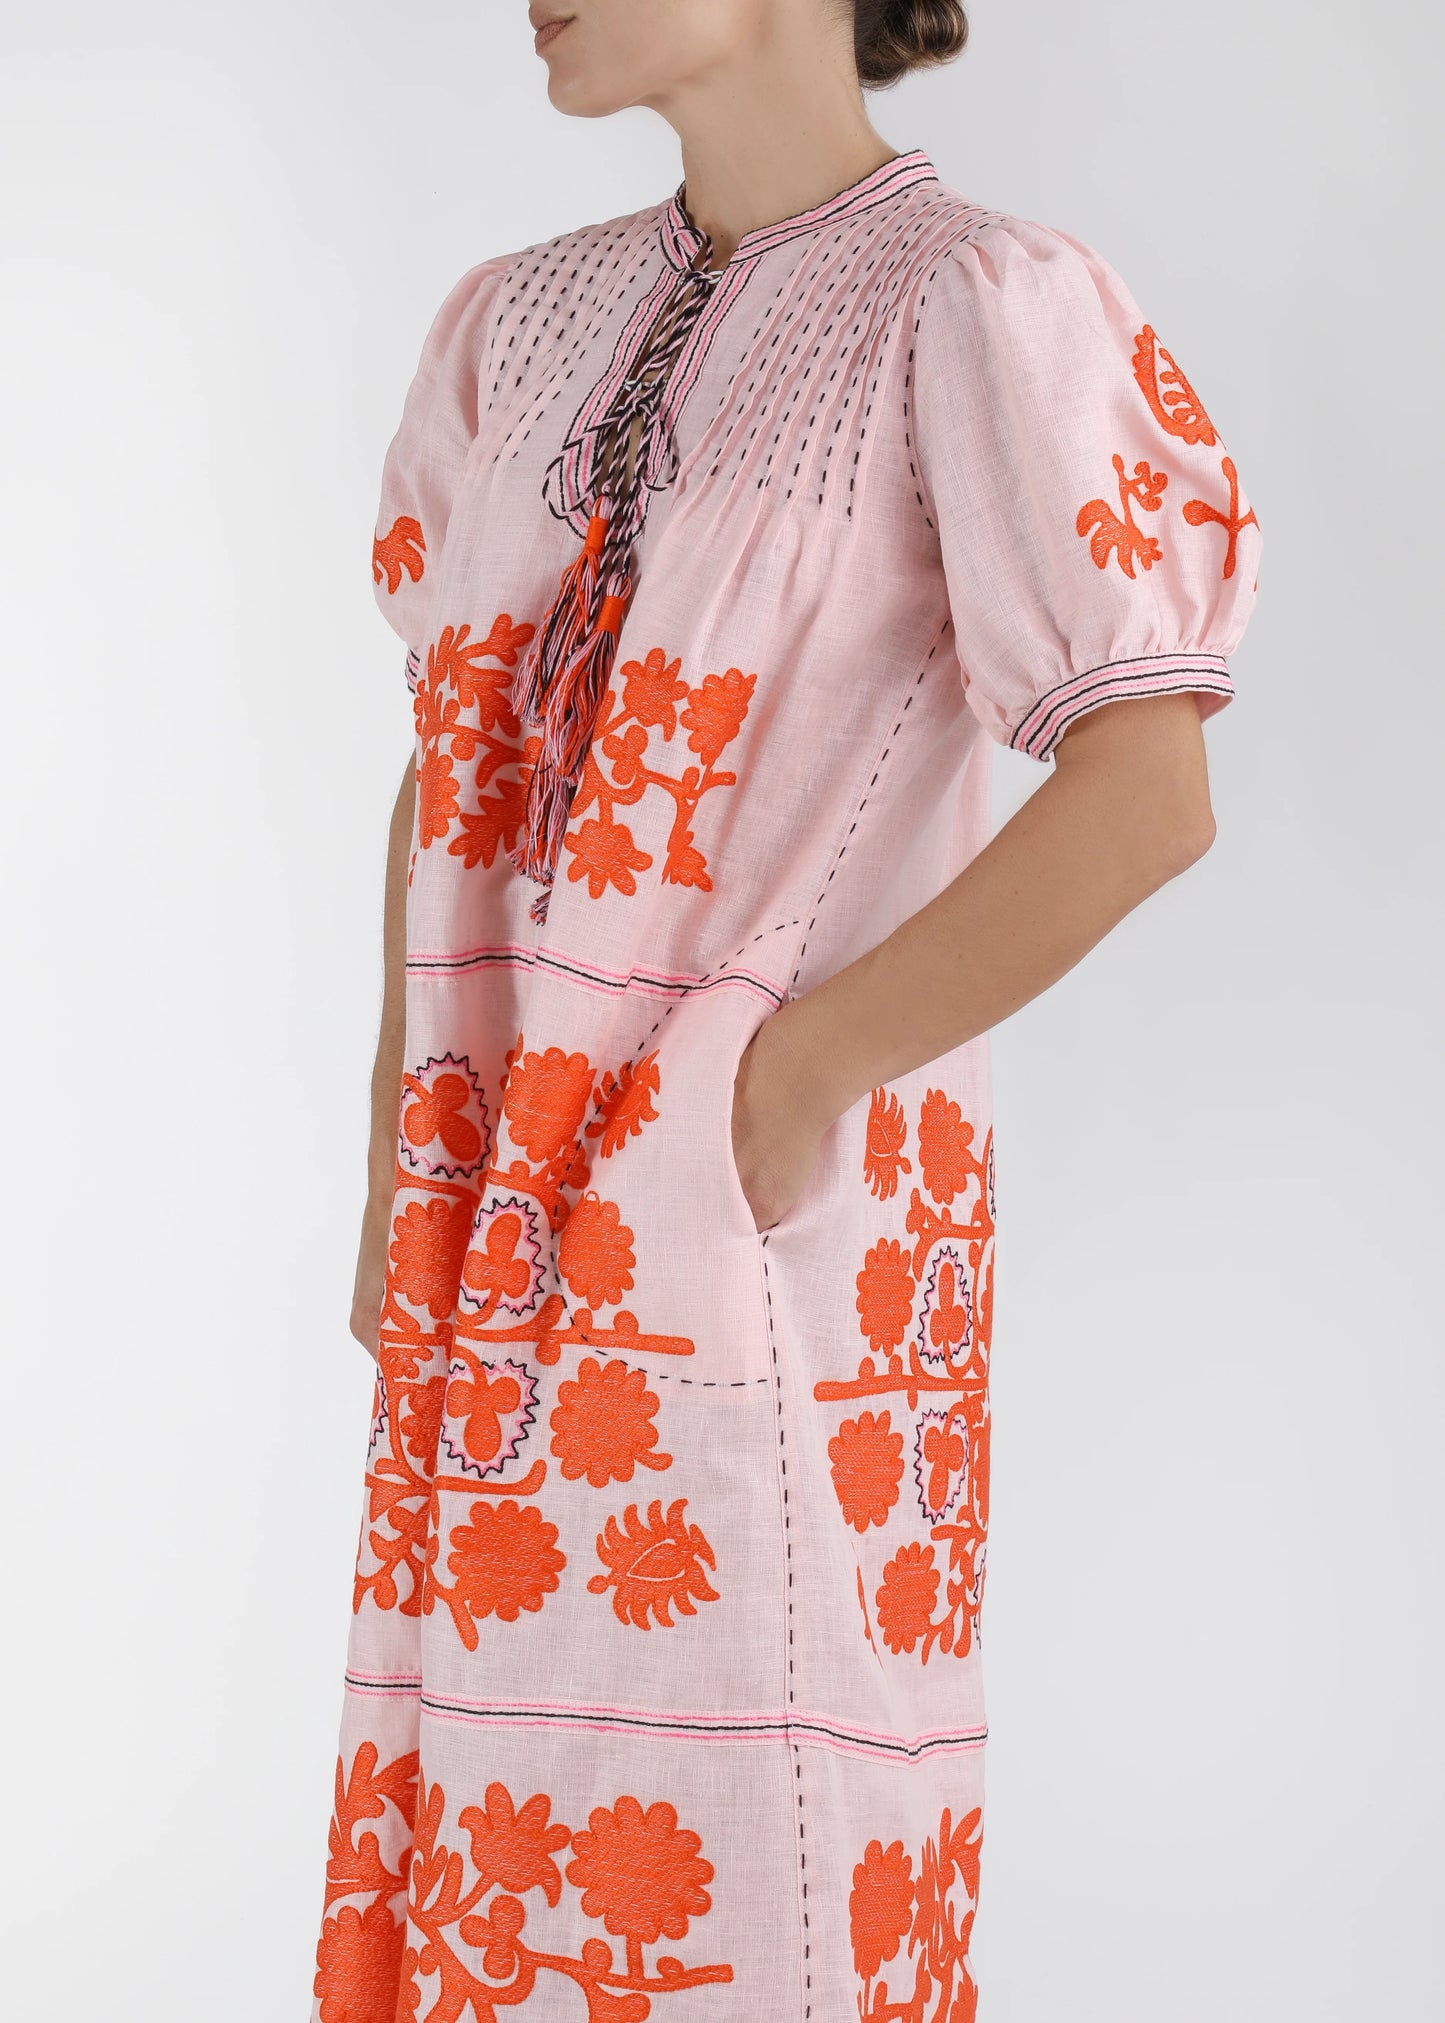 Natalia Ukrainian Embroidered Dress - Peach, Coral